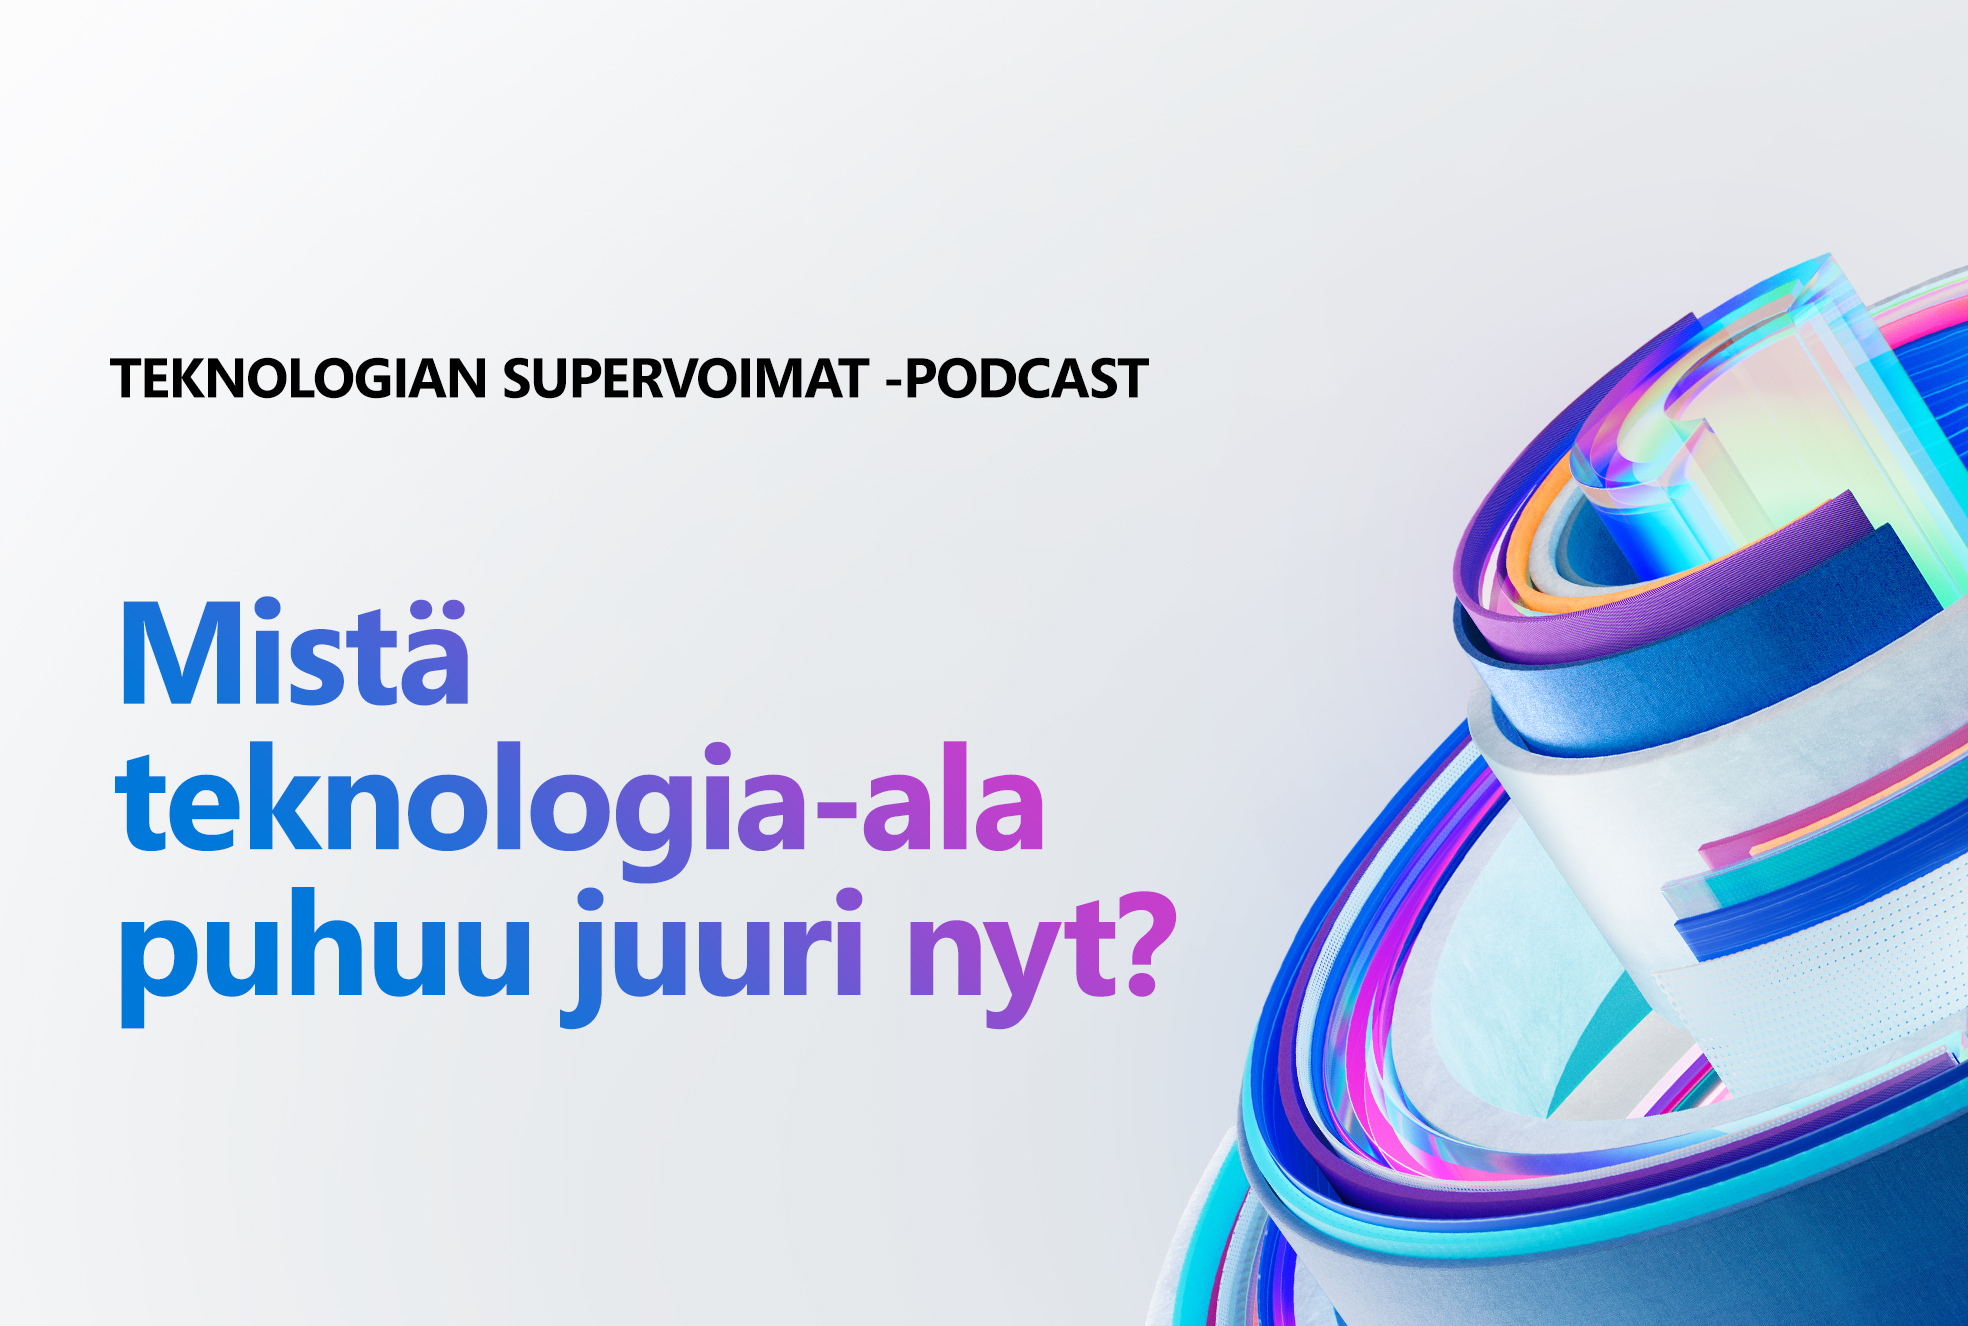 Kuvituskuva, jossa teksti: "Teknologian supervoimat -podcast. Mistä teknologia-ala puhuu juuri nyt?"